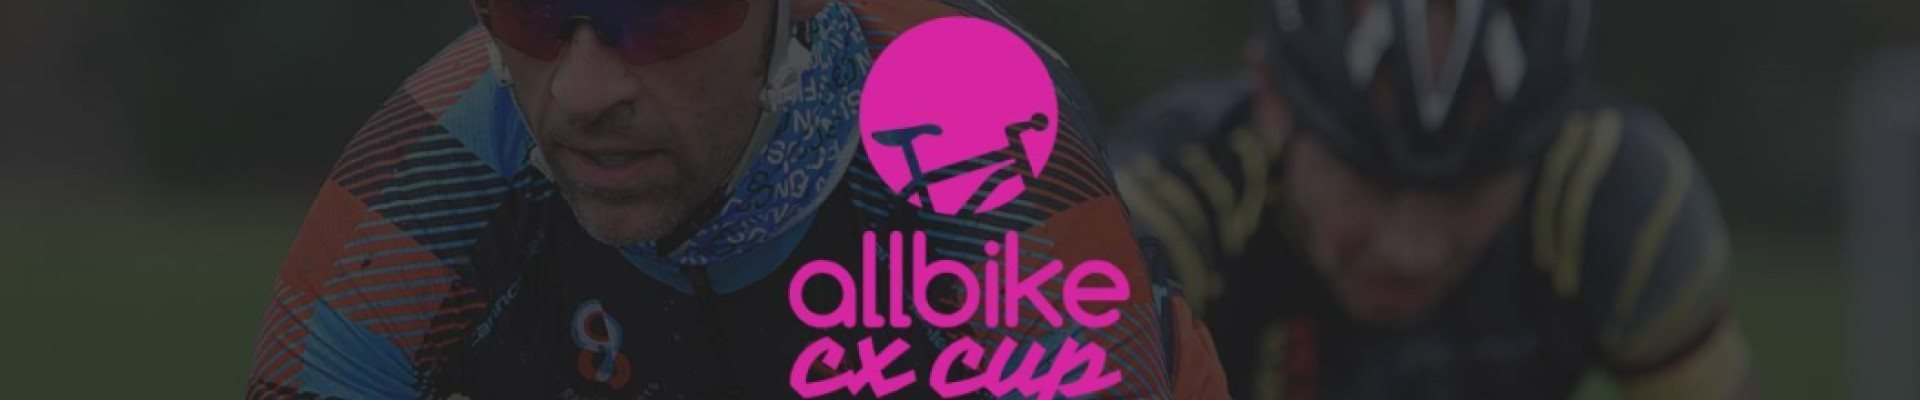 Allbike CX cup 20/21 #samlet